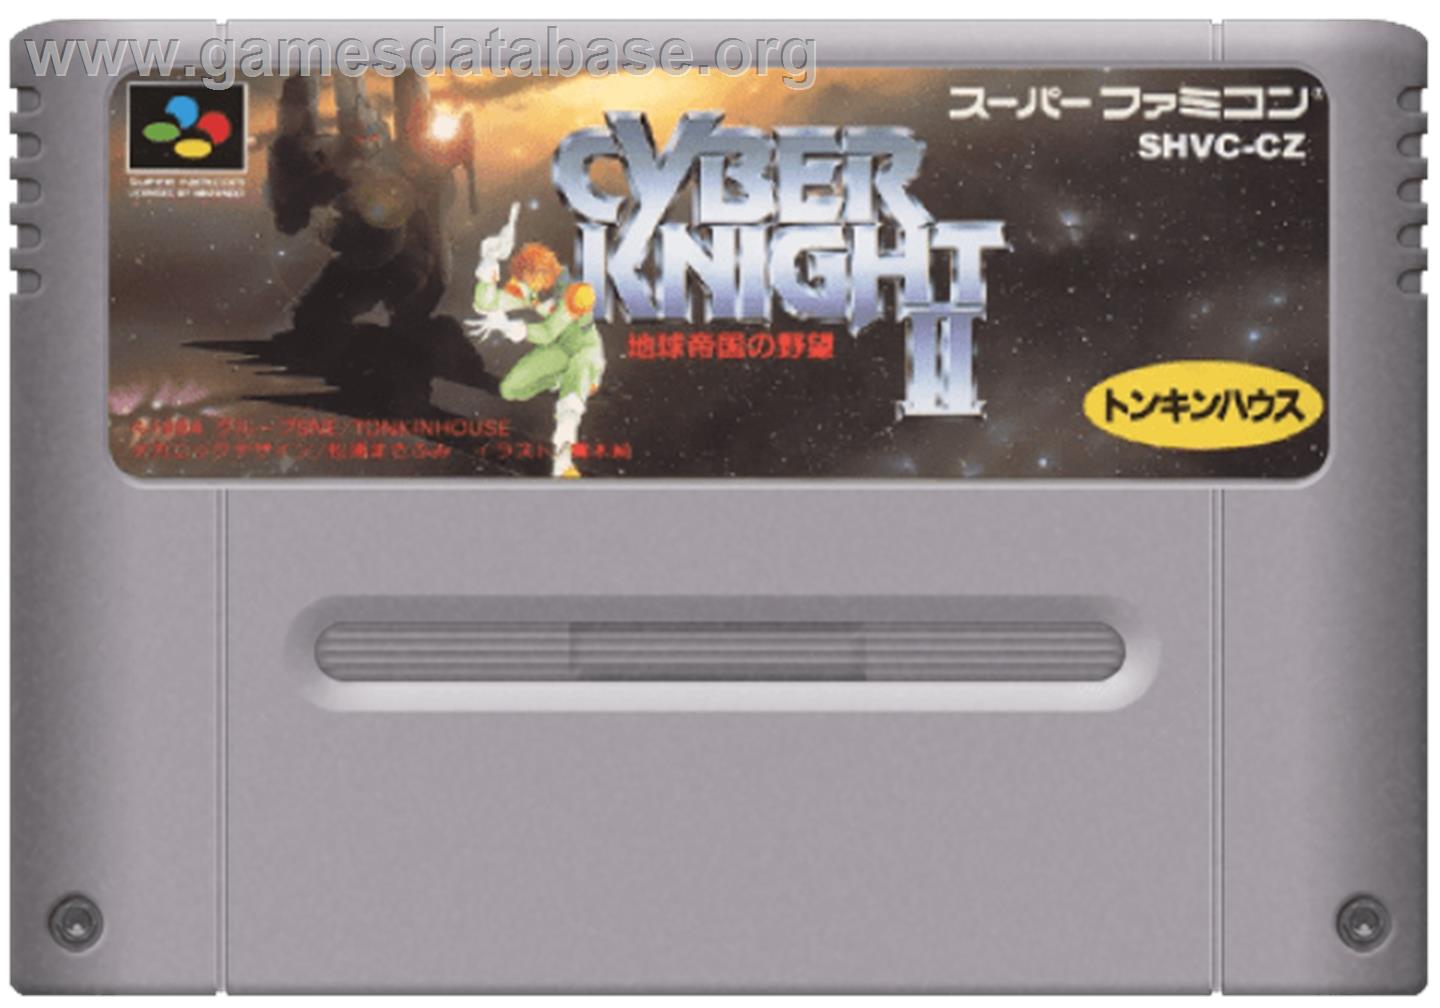 Cyber Knight II: Chikyuu Teikoku no Yabou - Nintendo SNES - Artwork - Cartridge